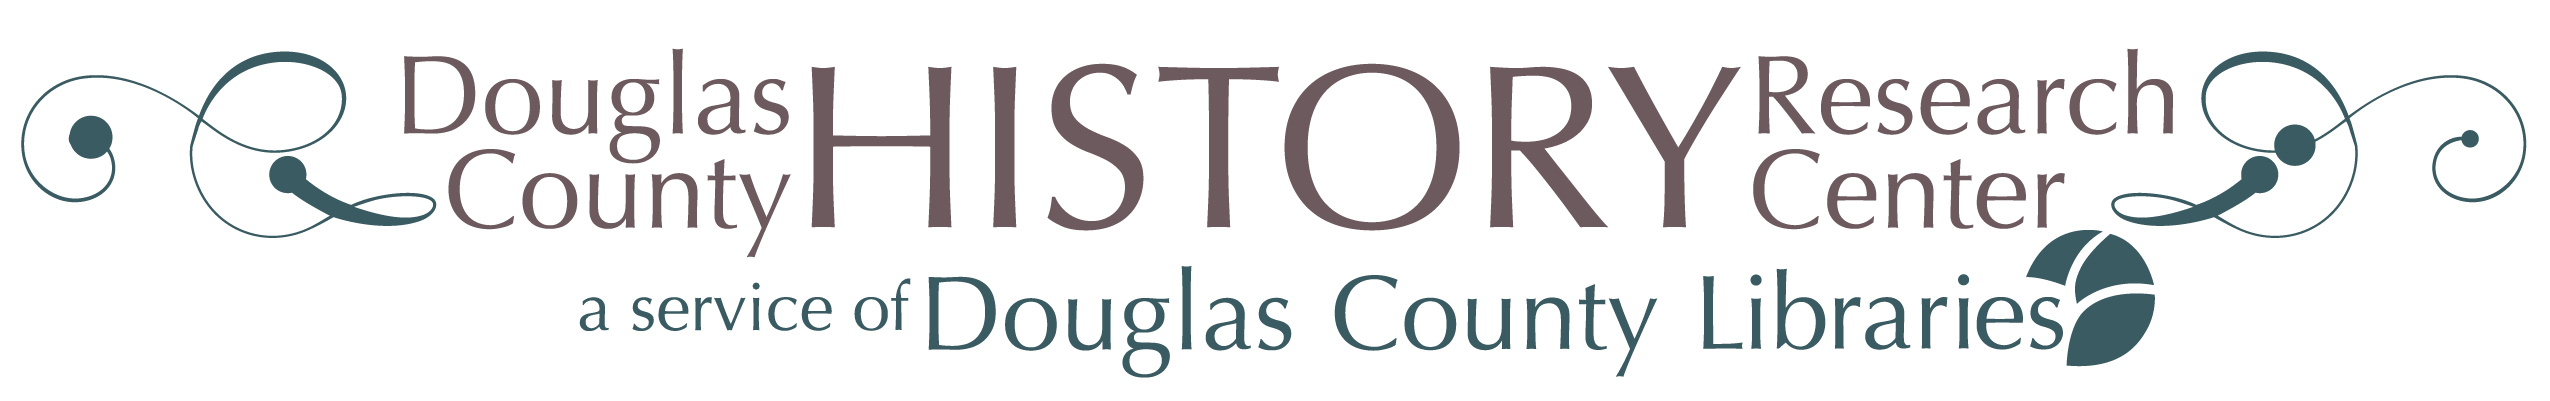 Logo des Douglas County History Research Center